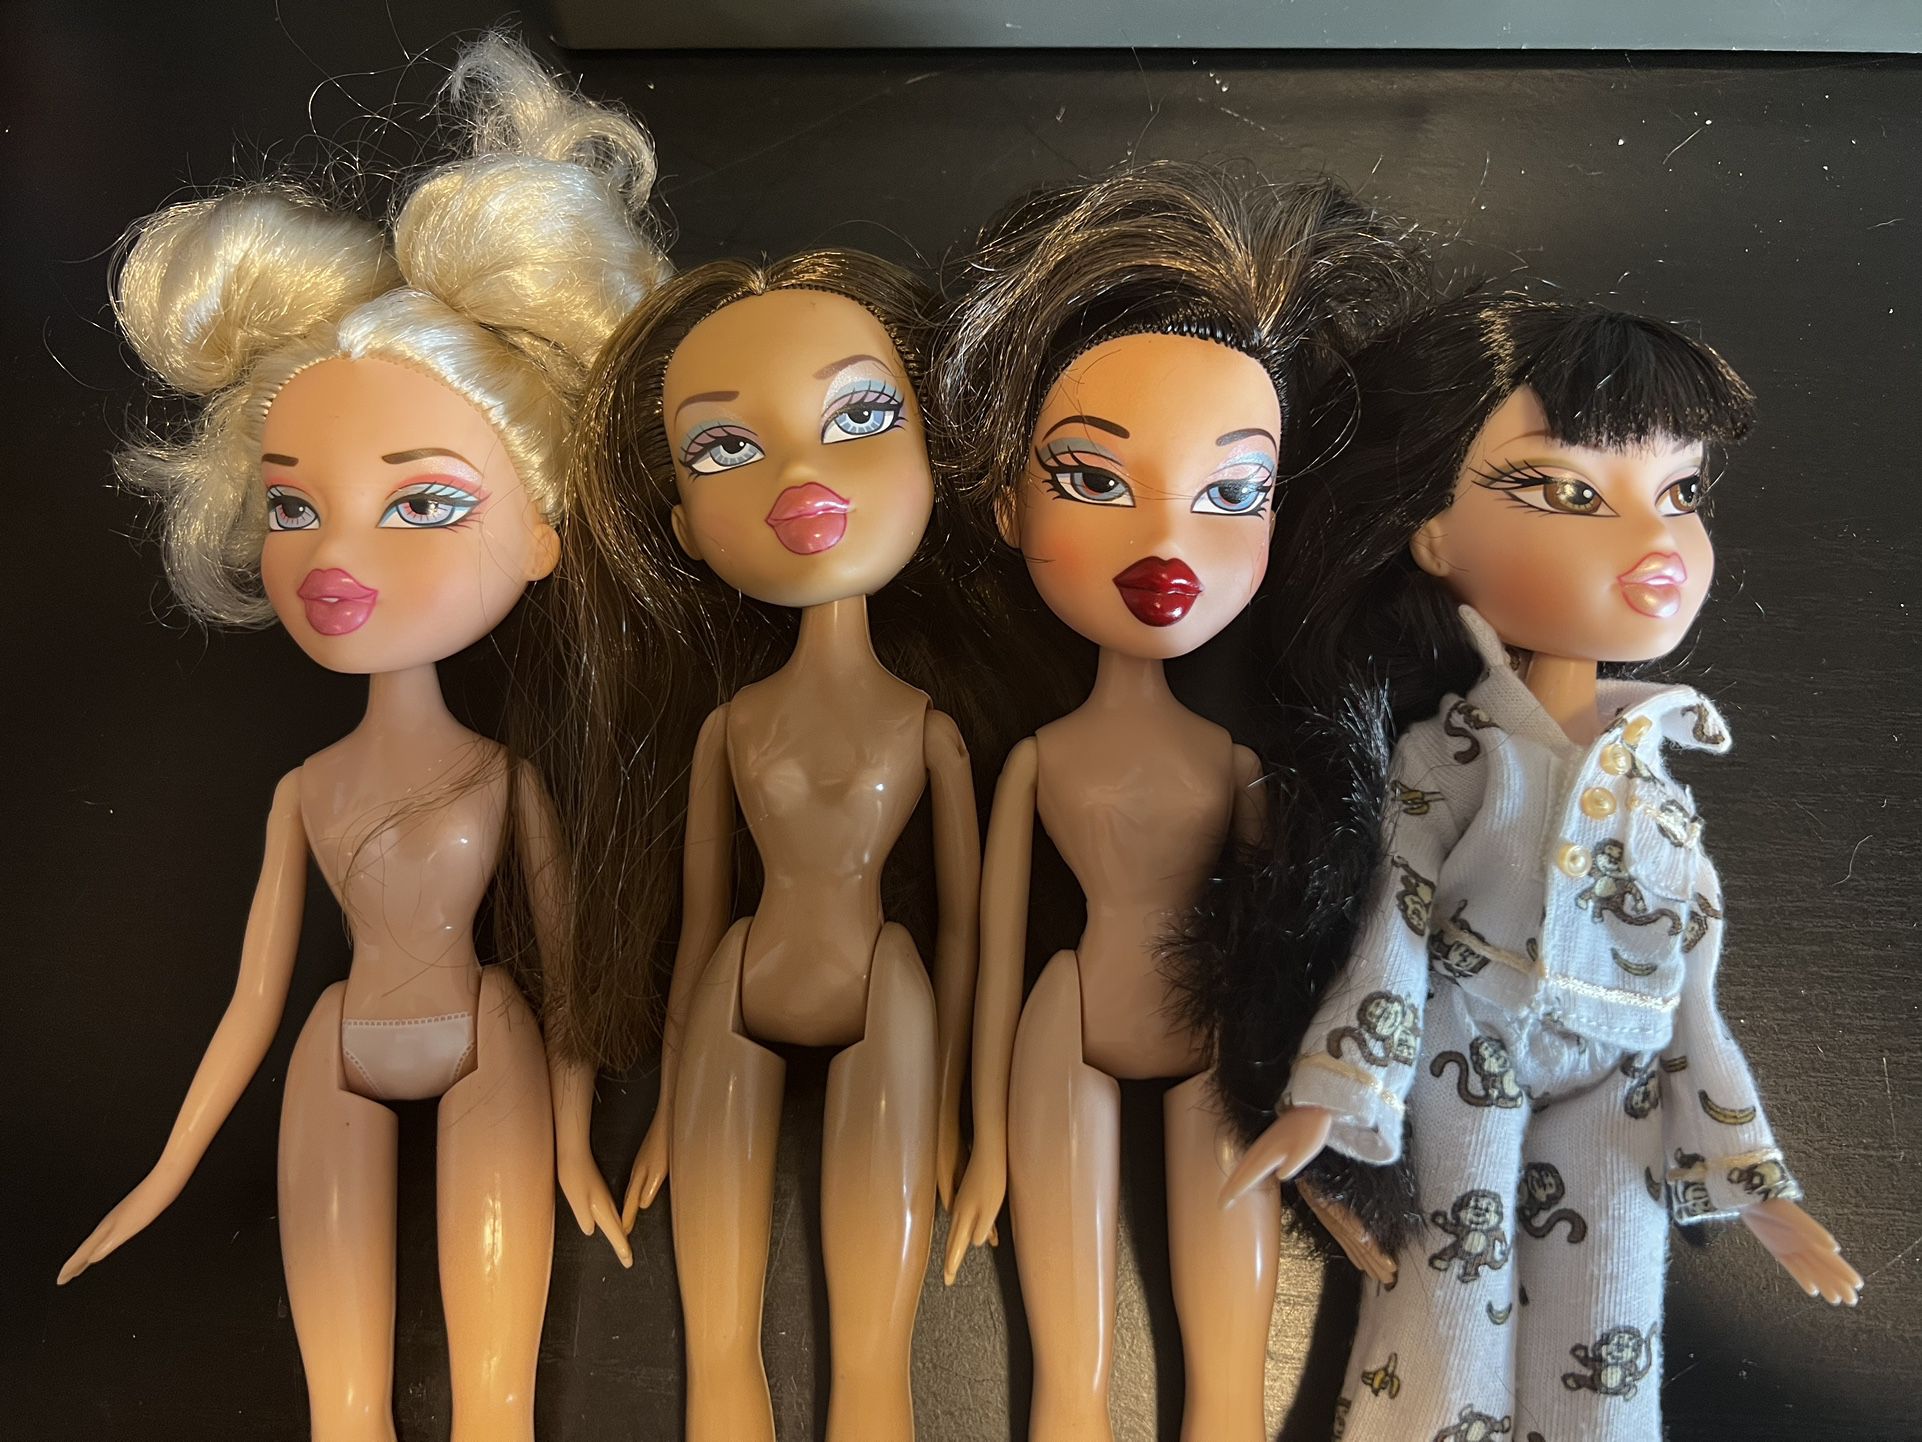 Bratz Dolls Lot - Cloe Dana Nevra Dolls